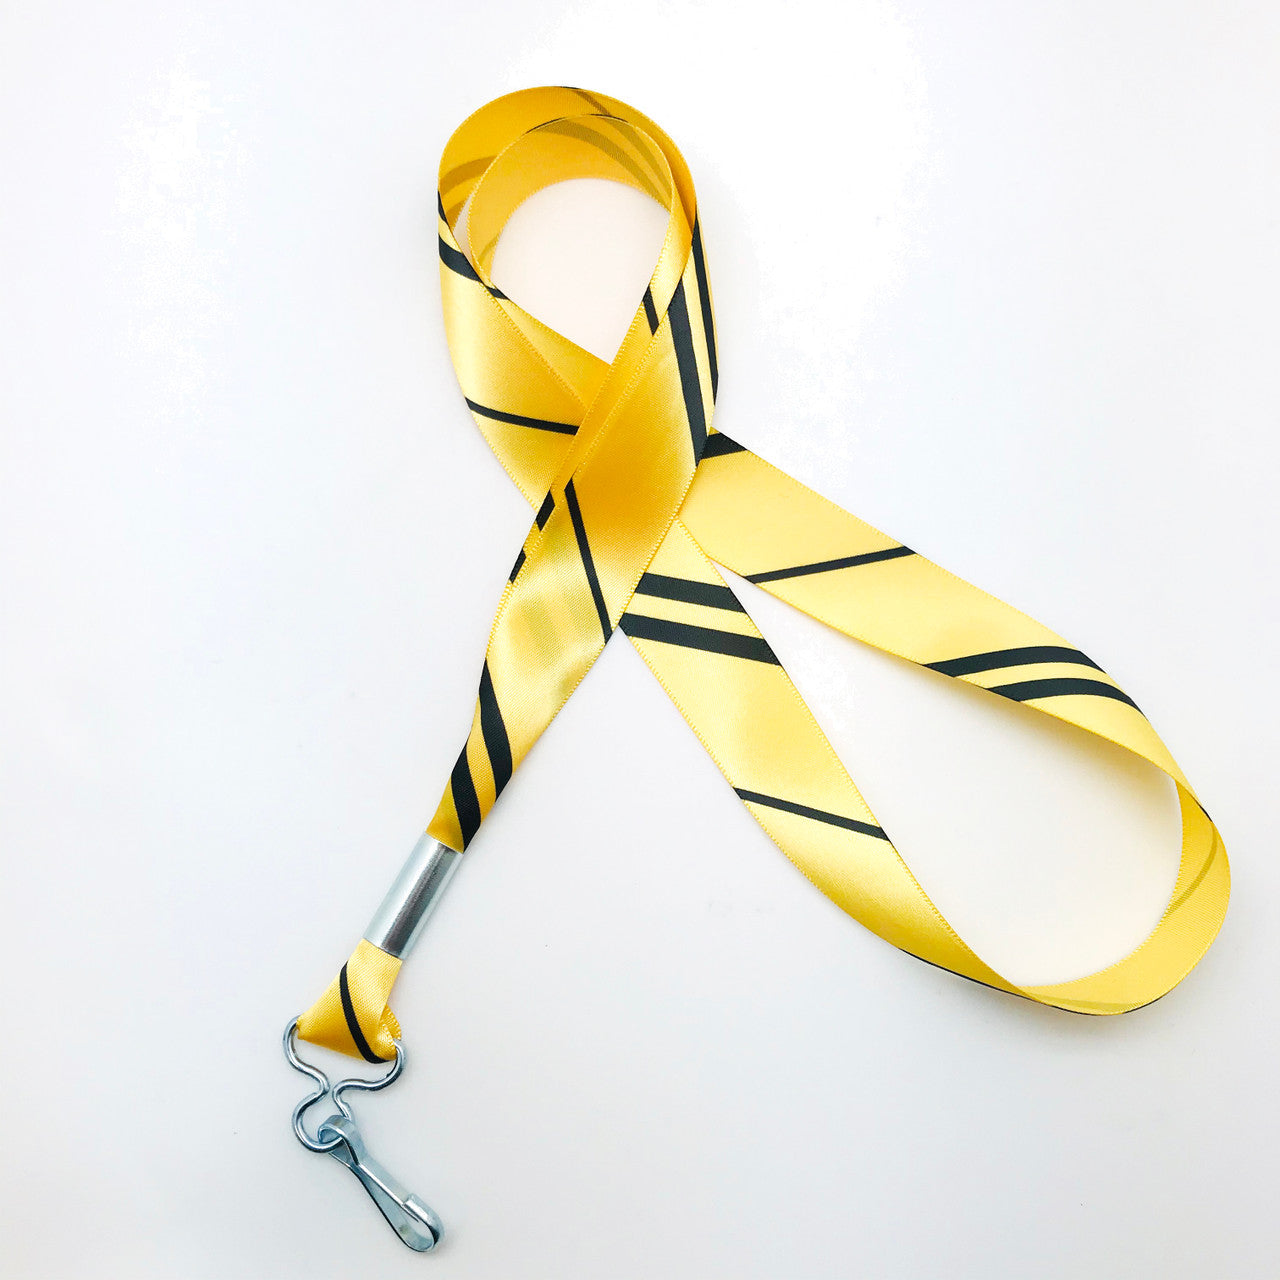 Hogwarts Hufflepuff house ribbon lanyard with yellow and black stripes  printed on 7/8 yellow single face satin ribbon